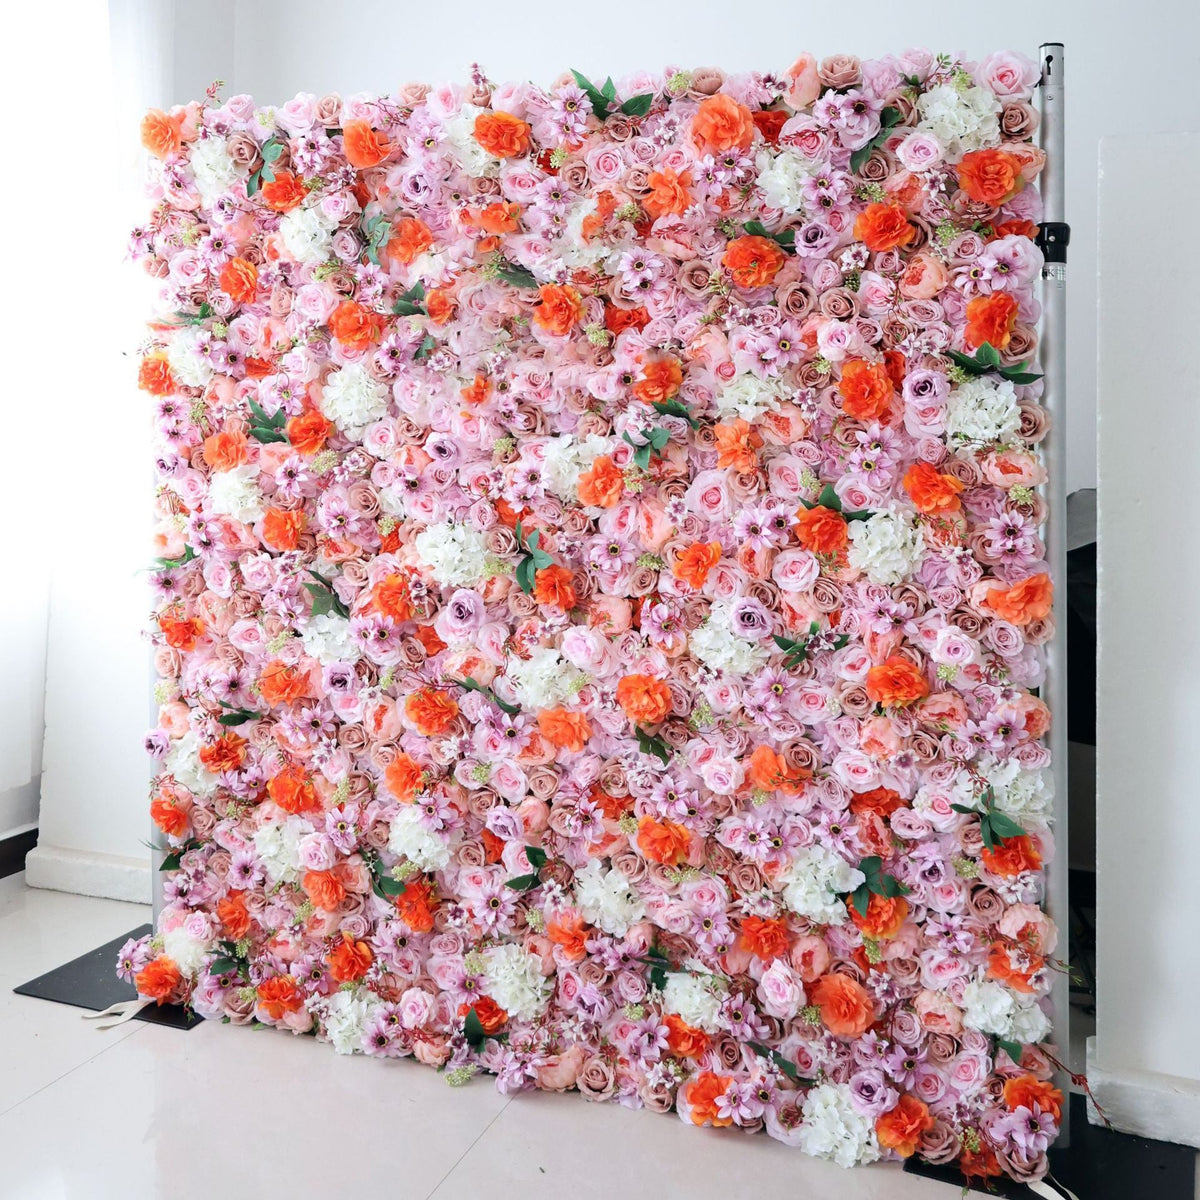 3D Artificial Flower Wall Arrangement Wedding Party Birthday Backdrop Decor HQ1317